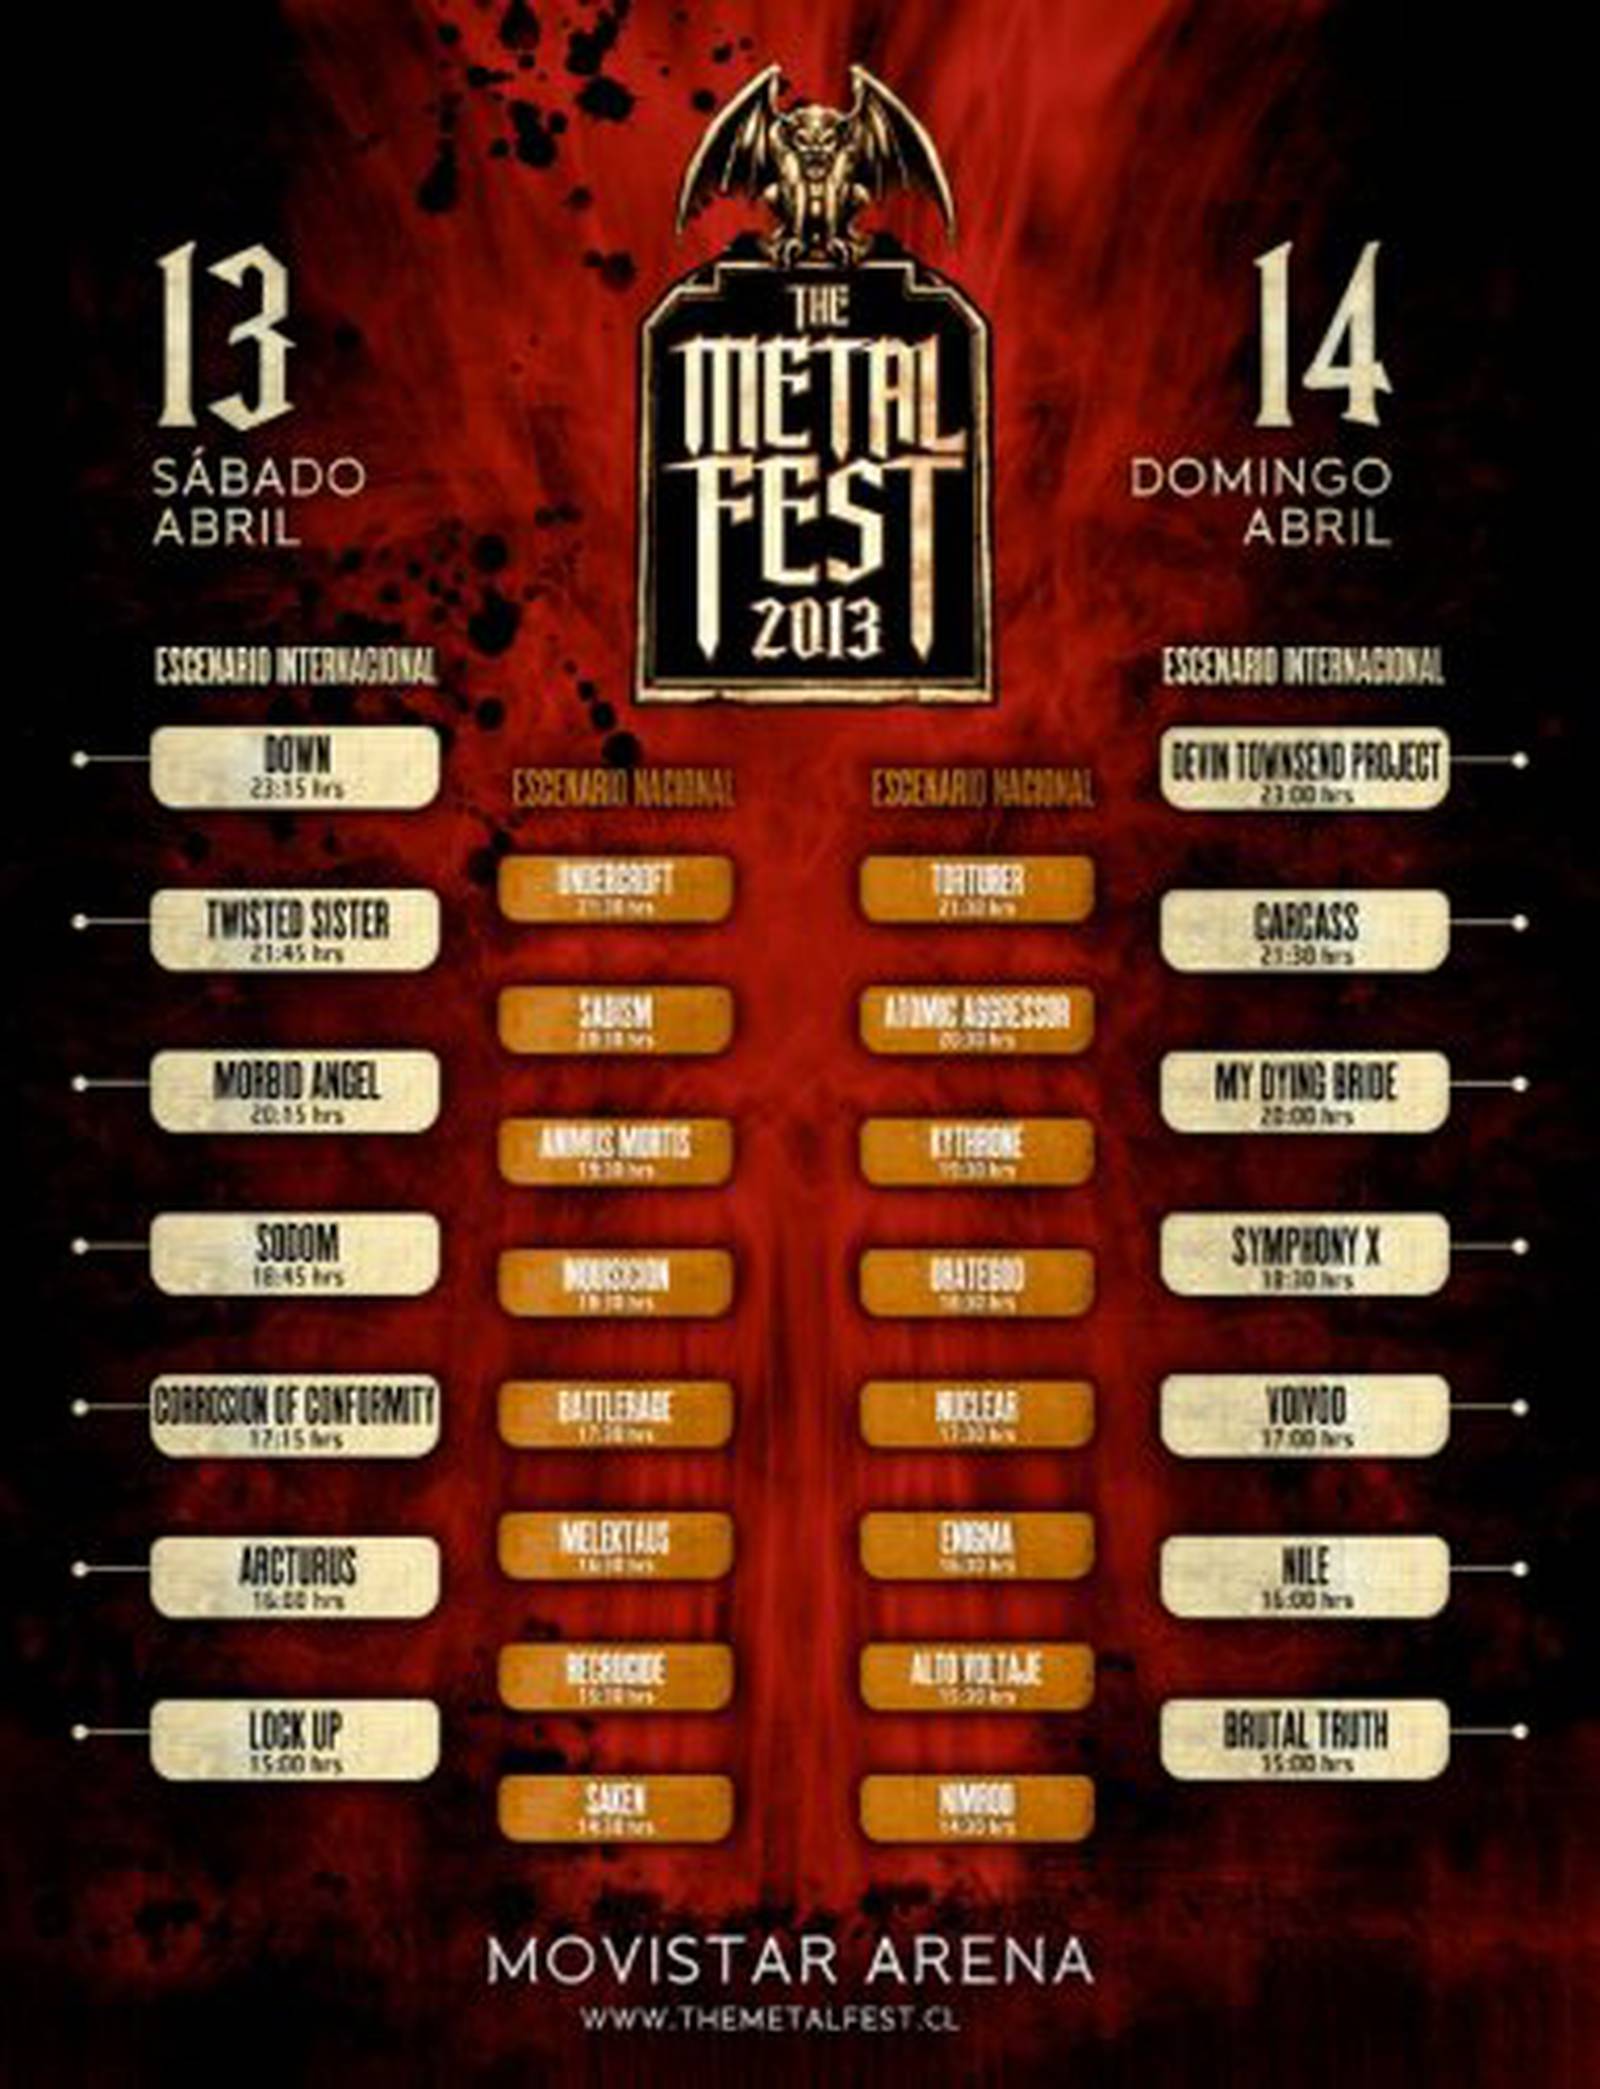 The Metal Fest anuncia Programación y horarios de bandas Publimetro Chile